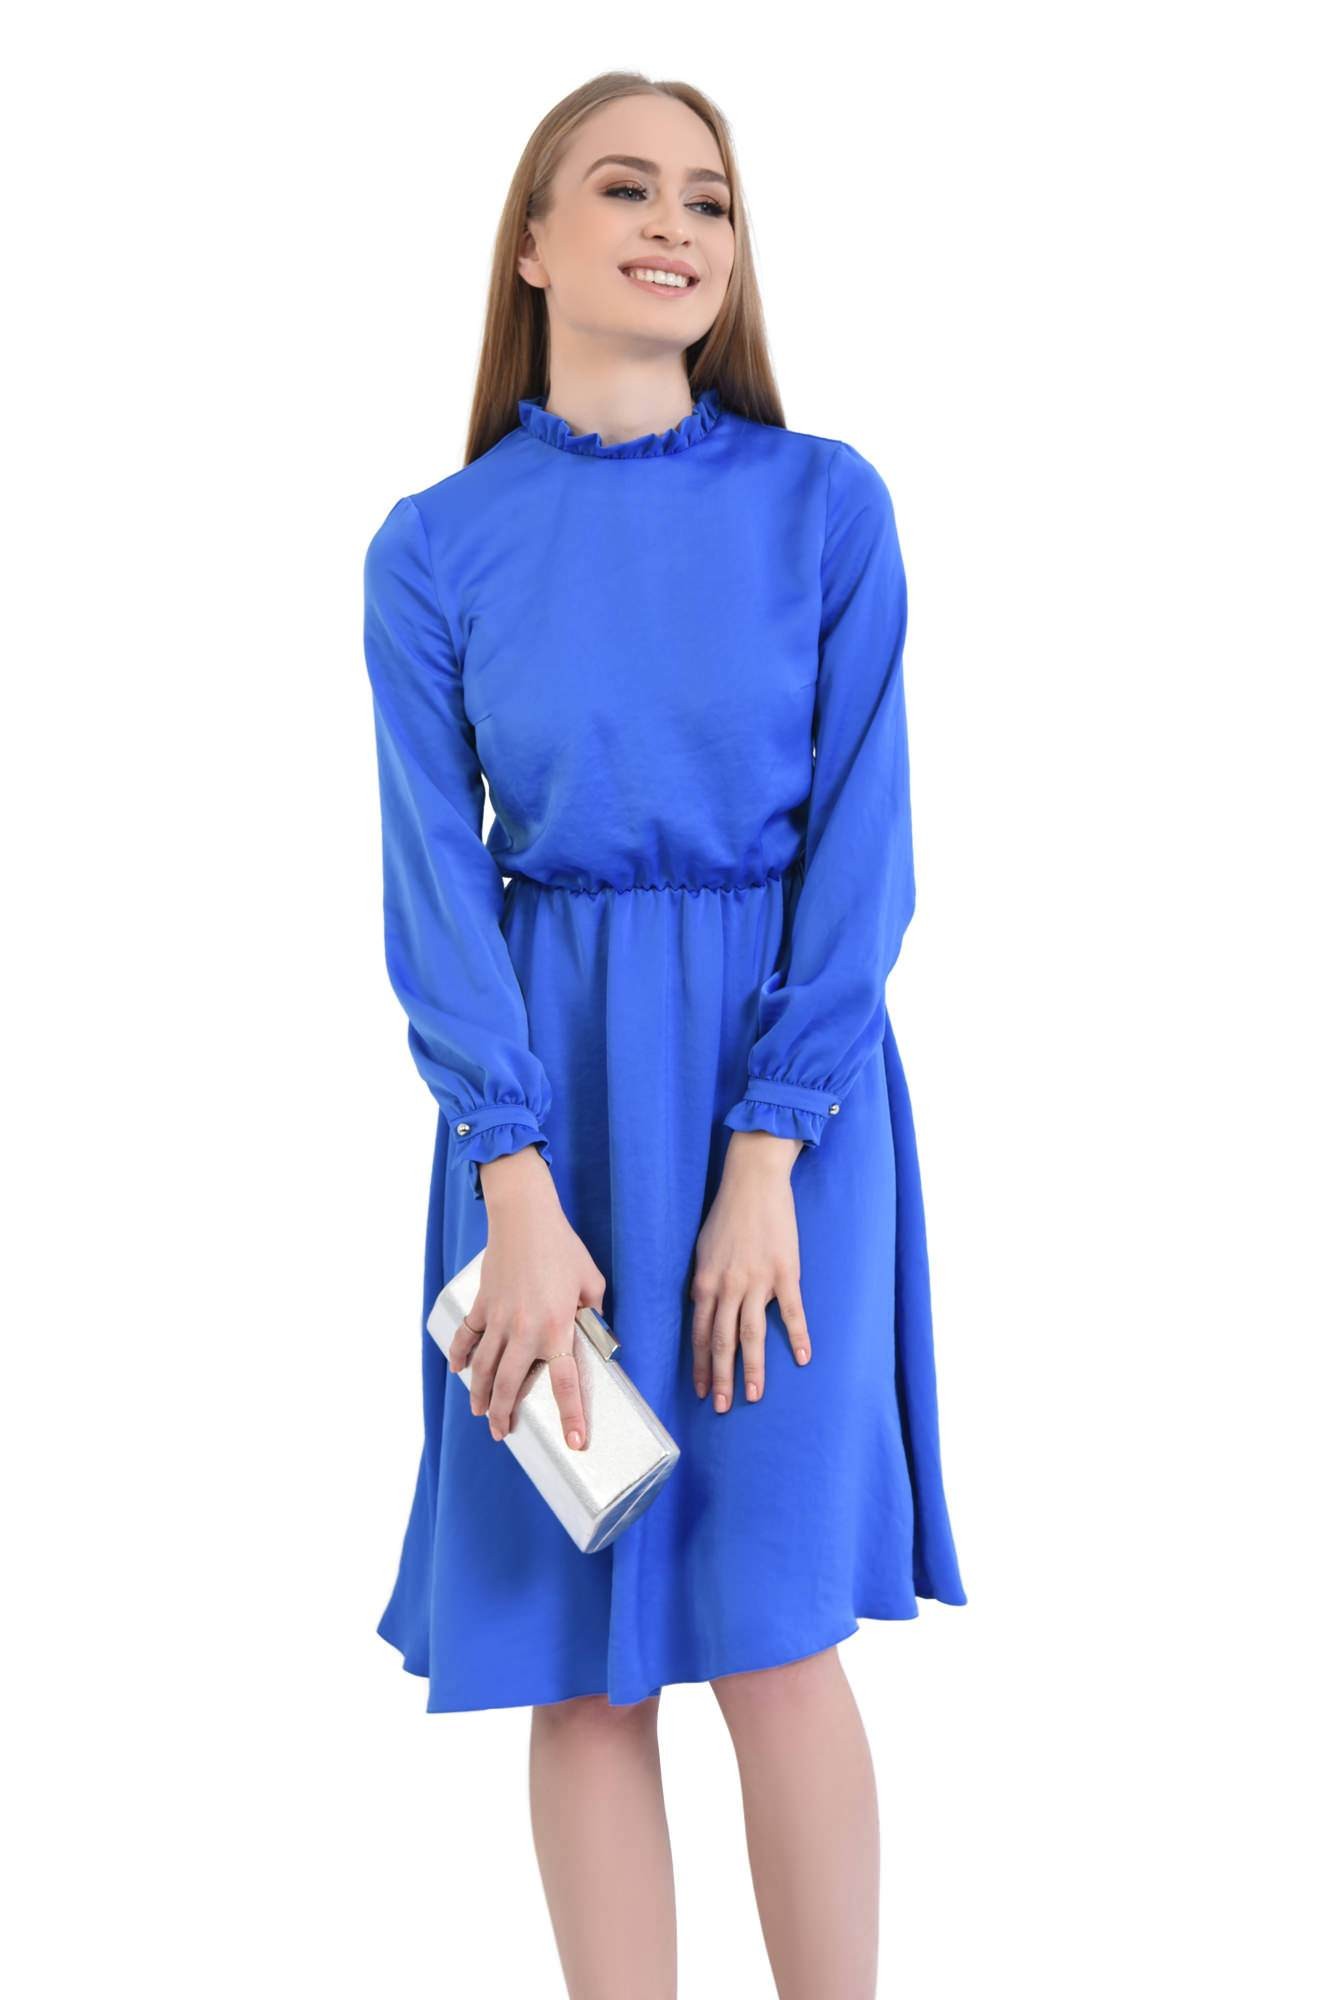 0 - rochie eleganta, evazata, midi, albastru, rochii online